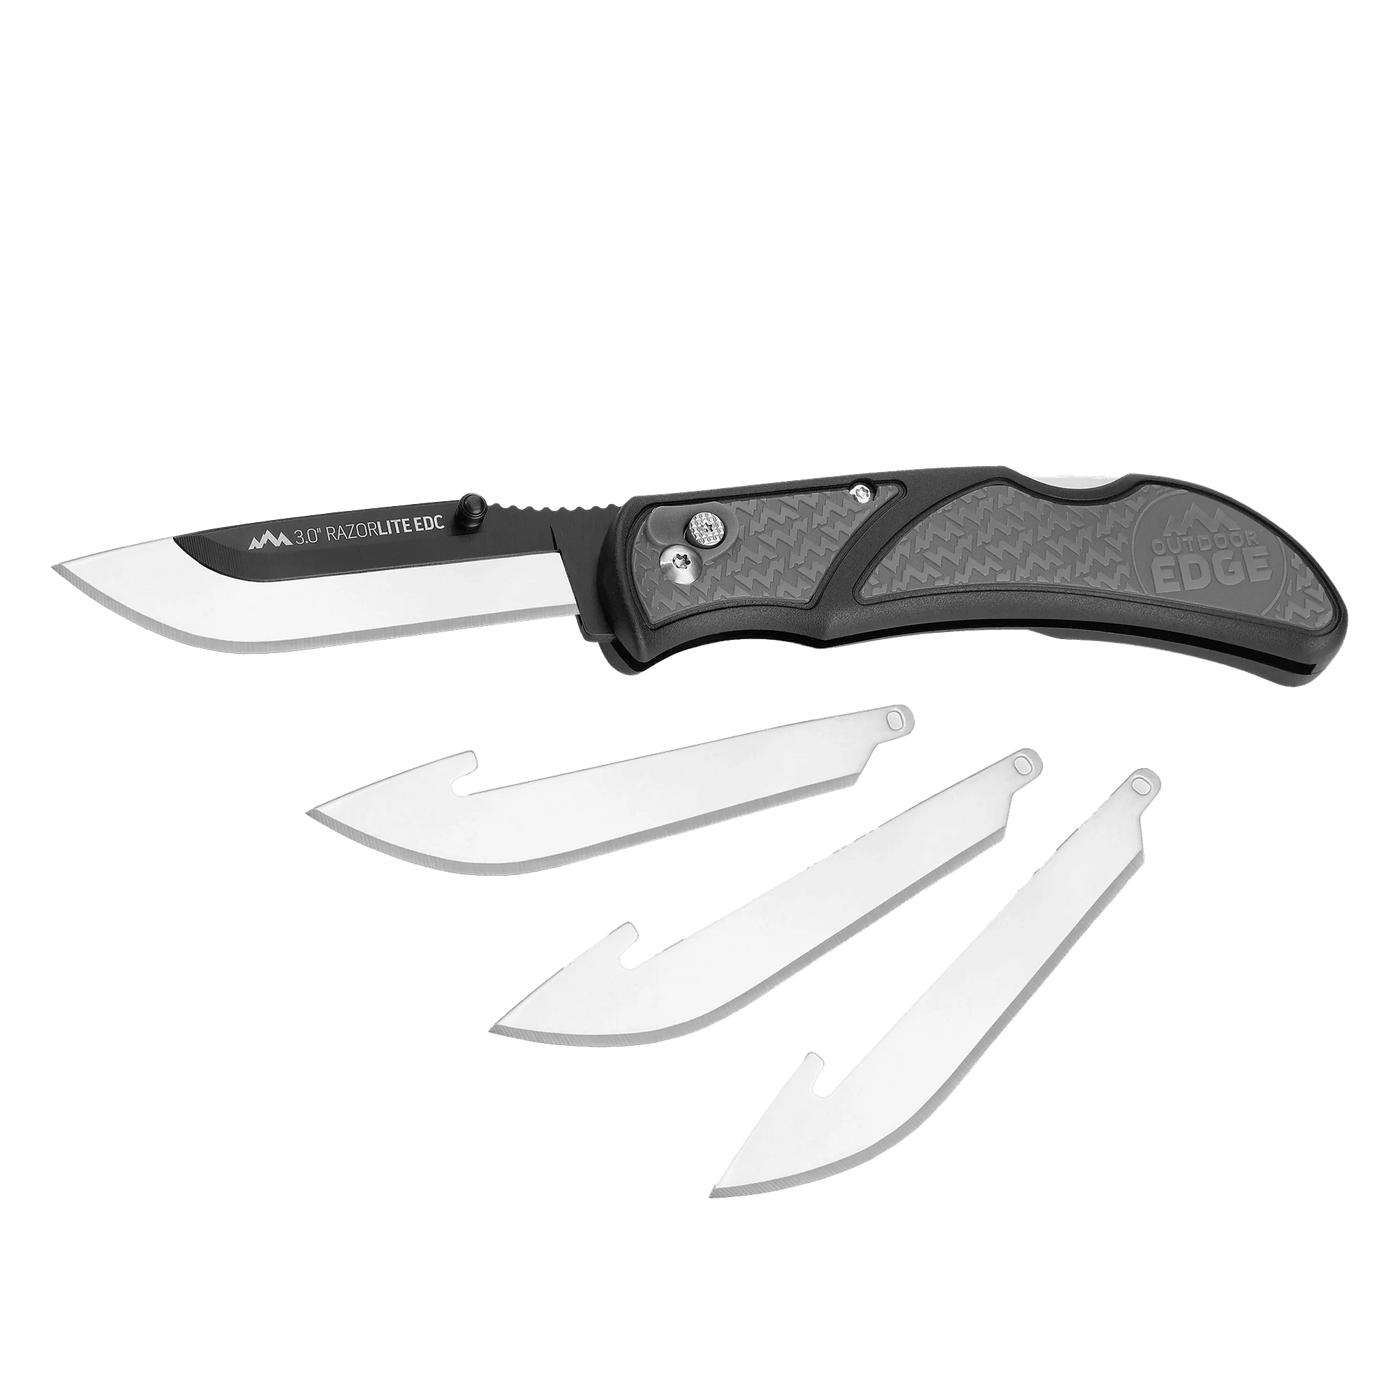 Outdoor Edge - 3.0" RazorEDC Lite Replaceable Blade Carry Knife Tools Outdoor Edge Gray 